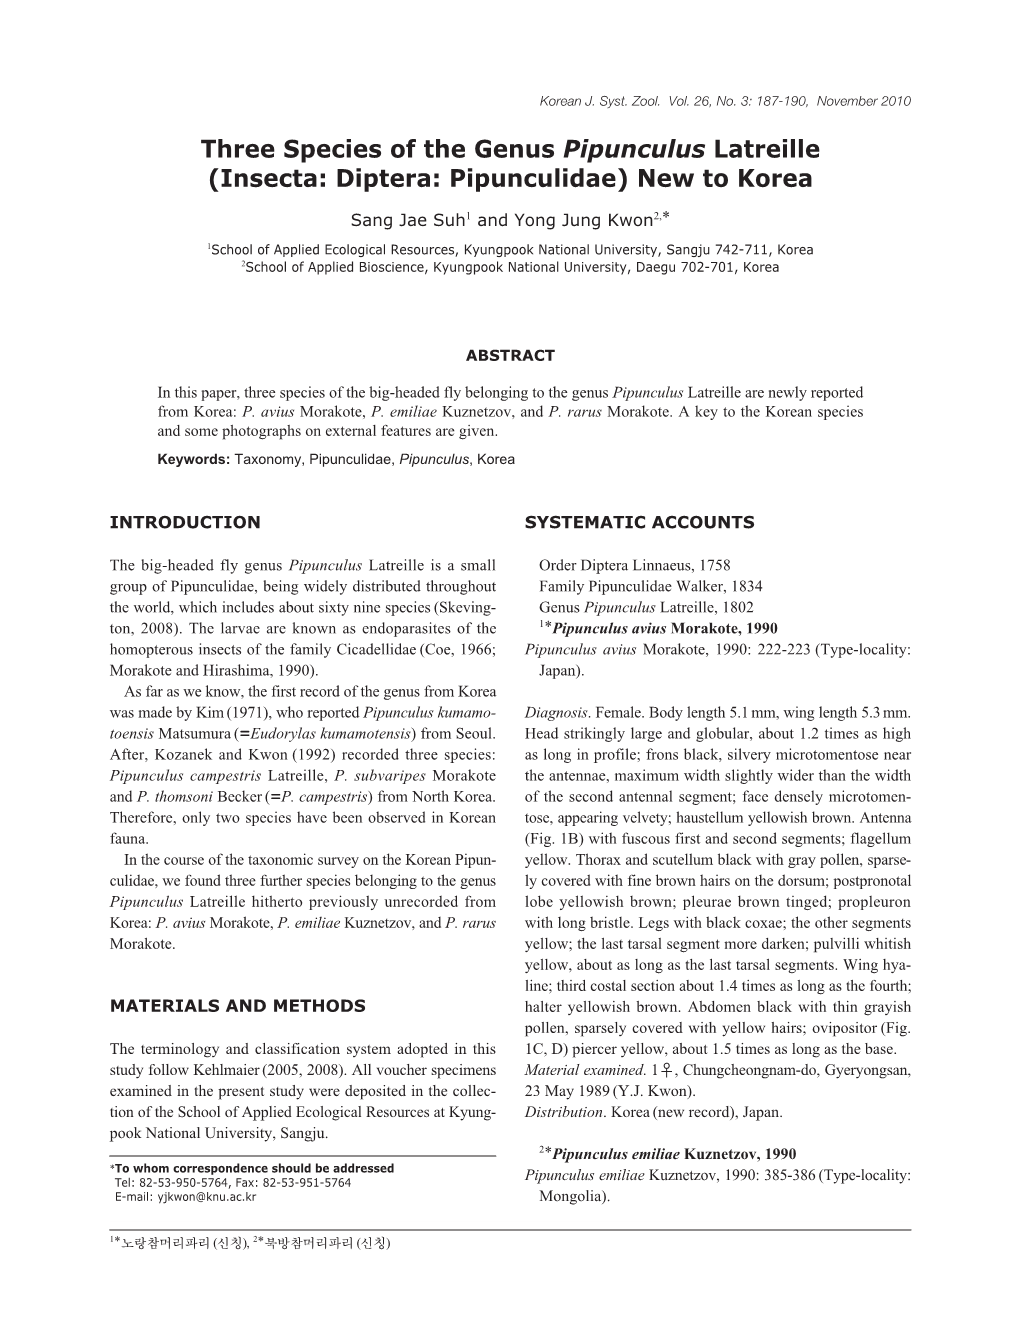 Three Species of the Genus Pipunculus Latreille (Insecta: Diptera: Pipunculidae) New to Korea